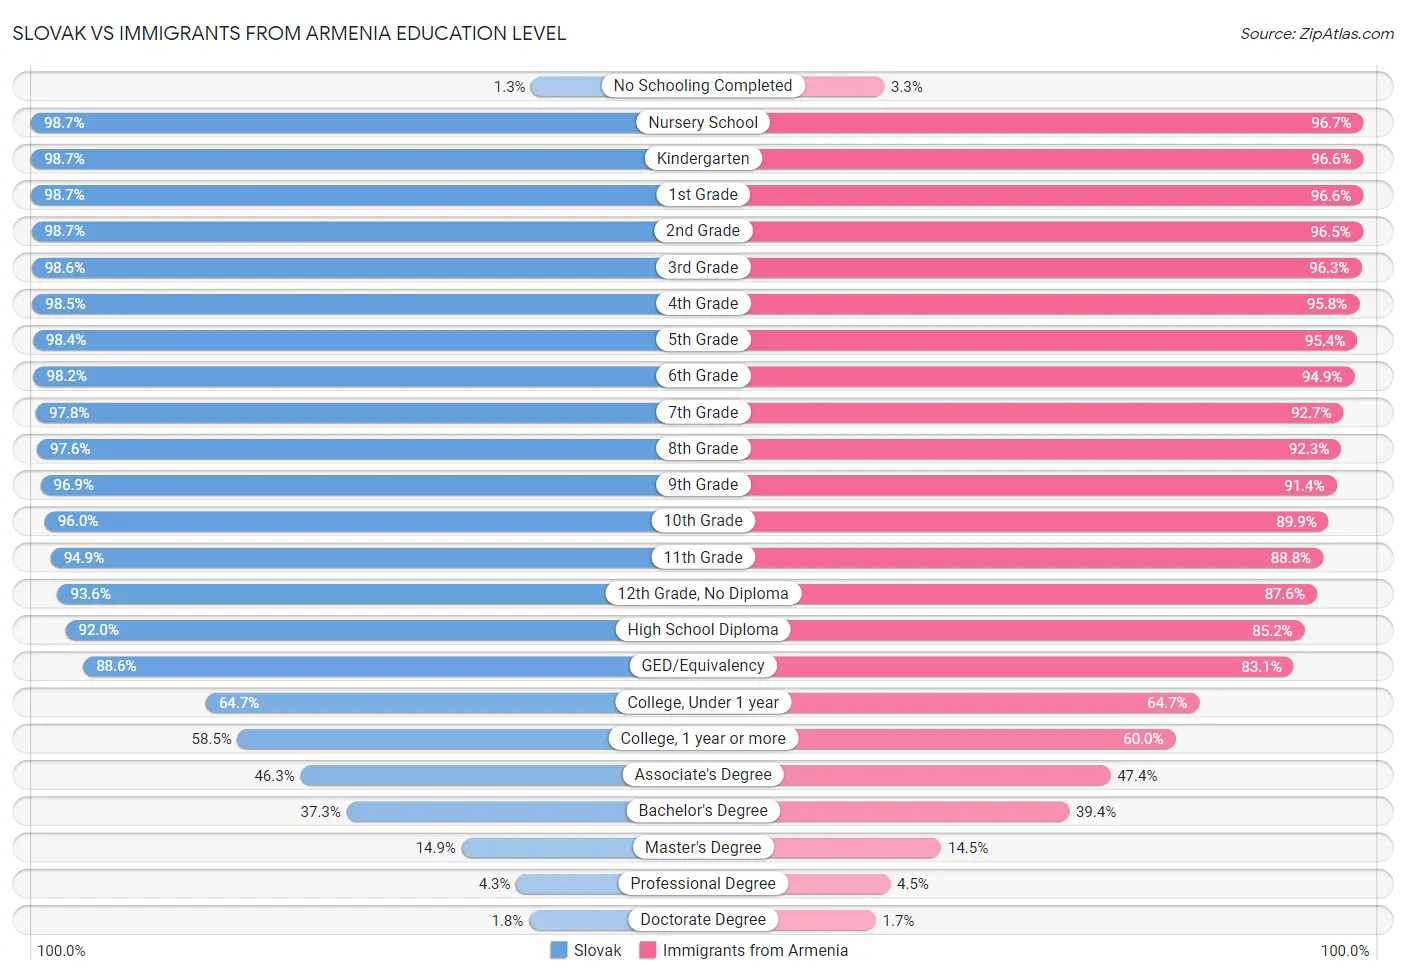 Slovak vs Immigrants from Armenia Education Level